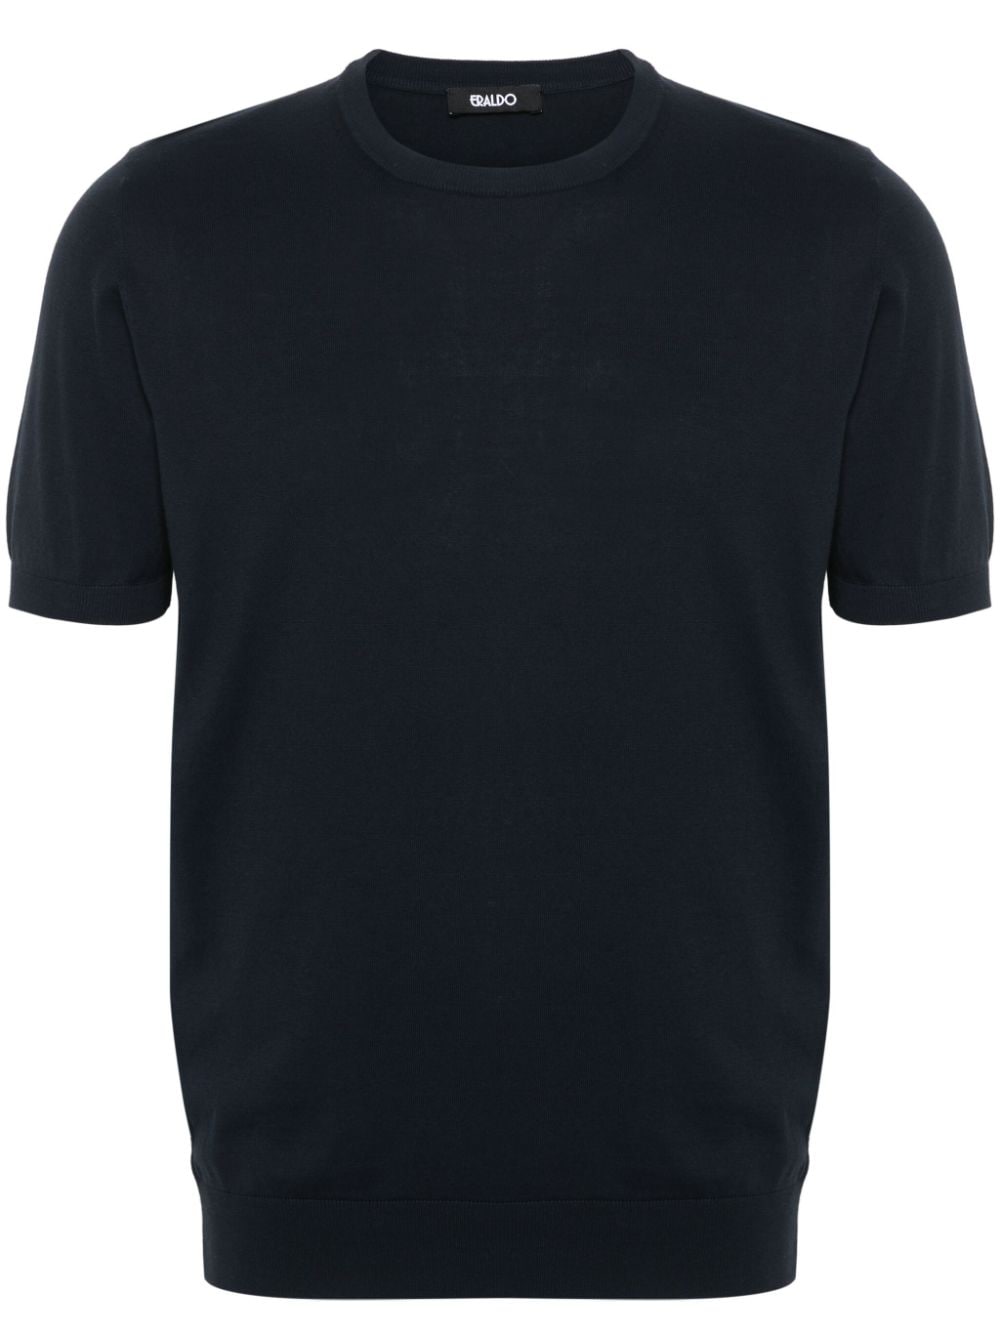 ERALDO T-shirt - Blu